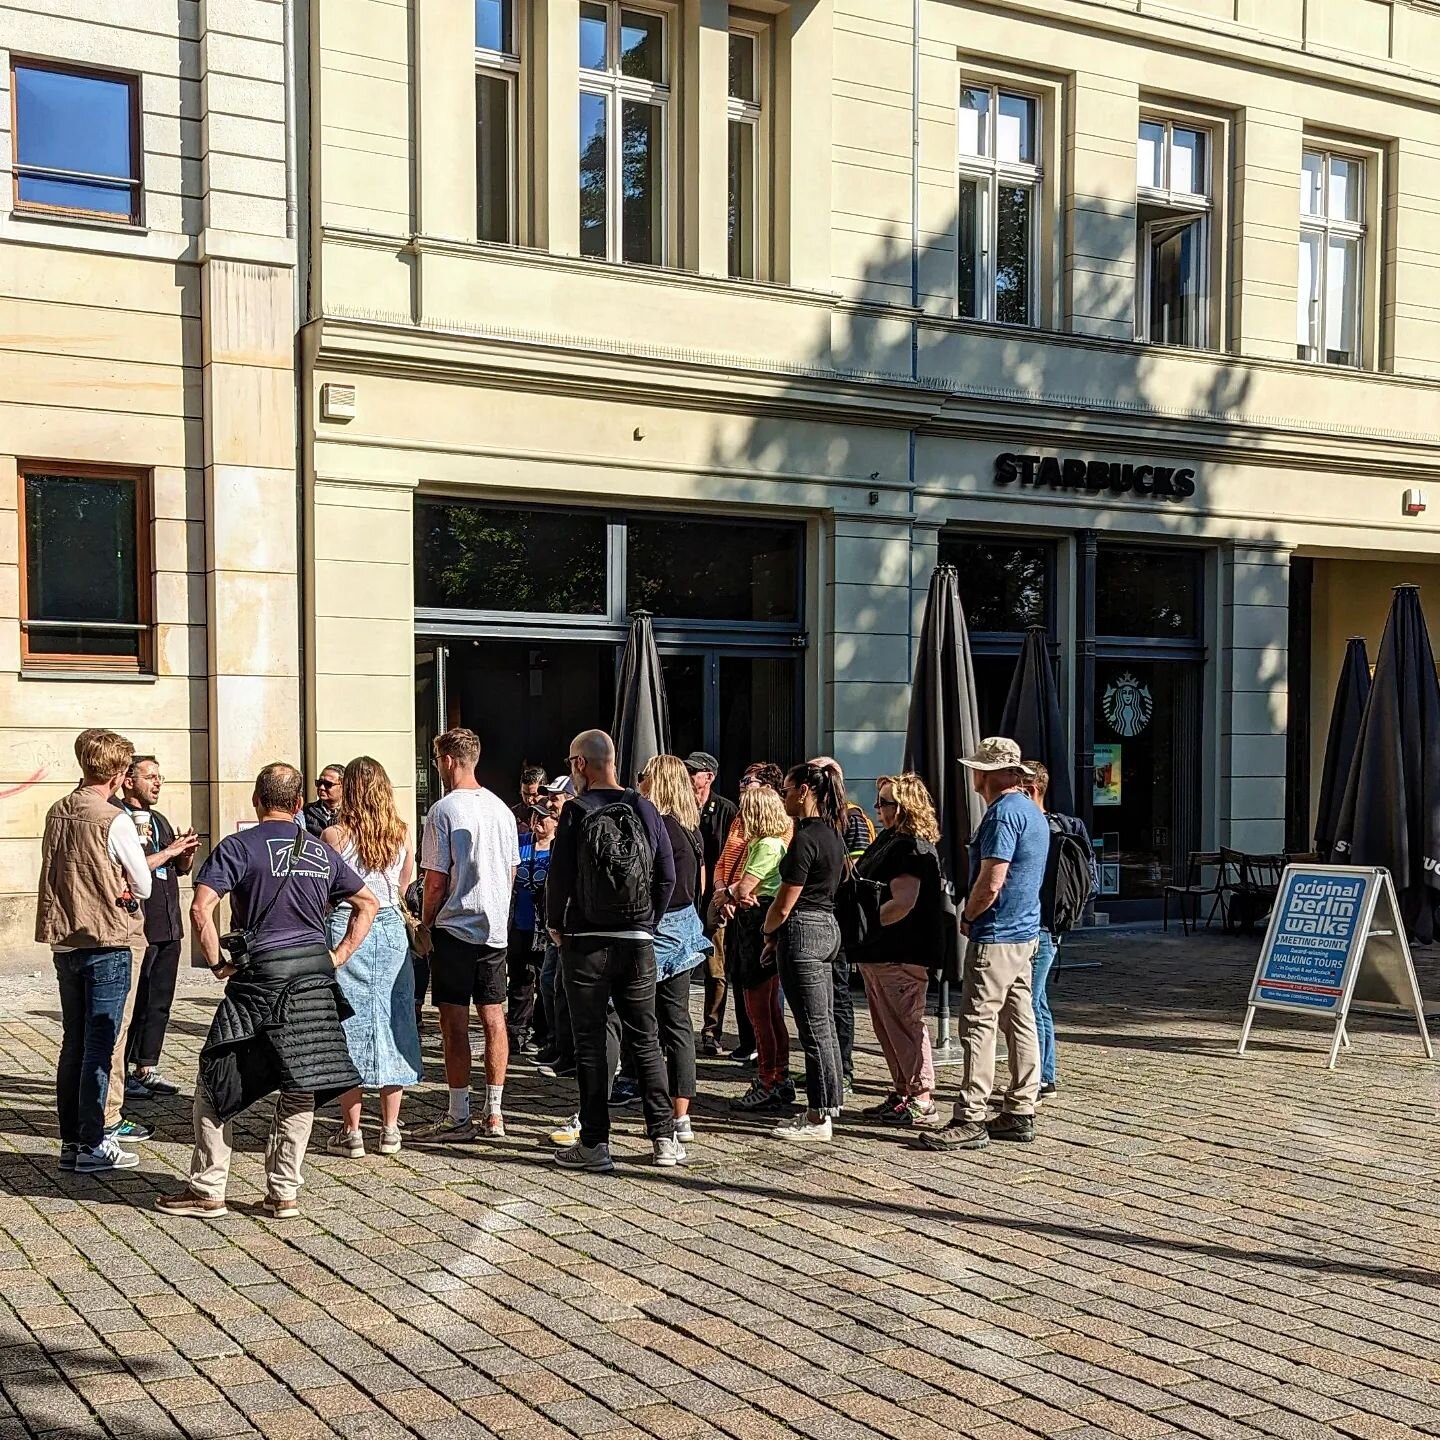 Spotted at @starbucksde Hackescher Markt this morning...our 9 am Discover Tour getting started in the June sunshine! 
.
.
.
#originalberlinwalks #discoverberlin #berlinentdecken #berlinstagram #tourism #starbucks #visitberlin